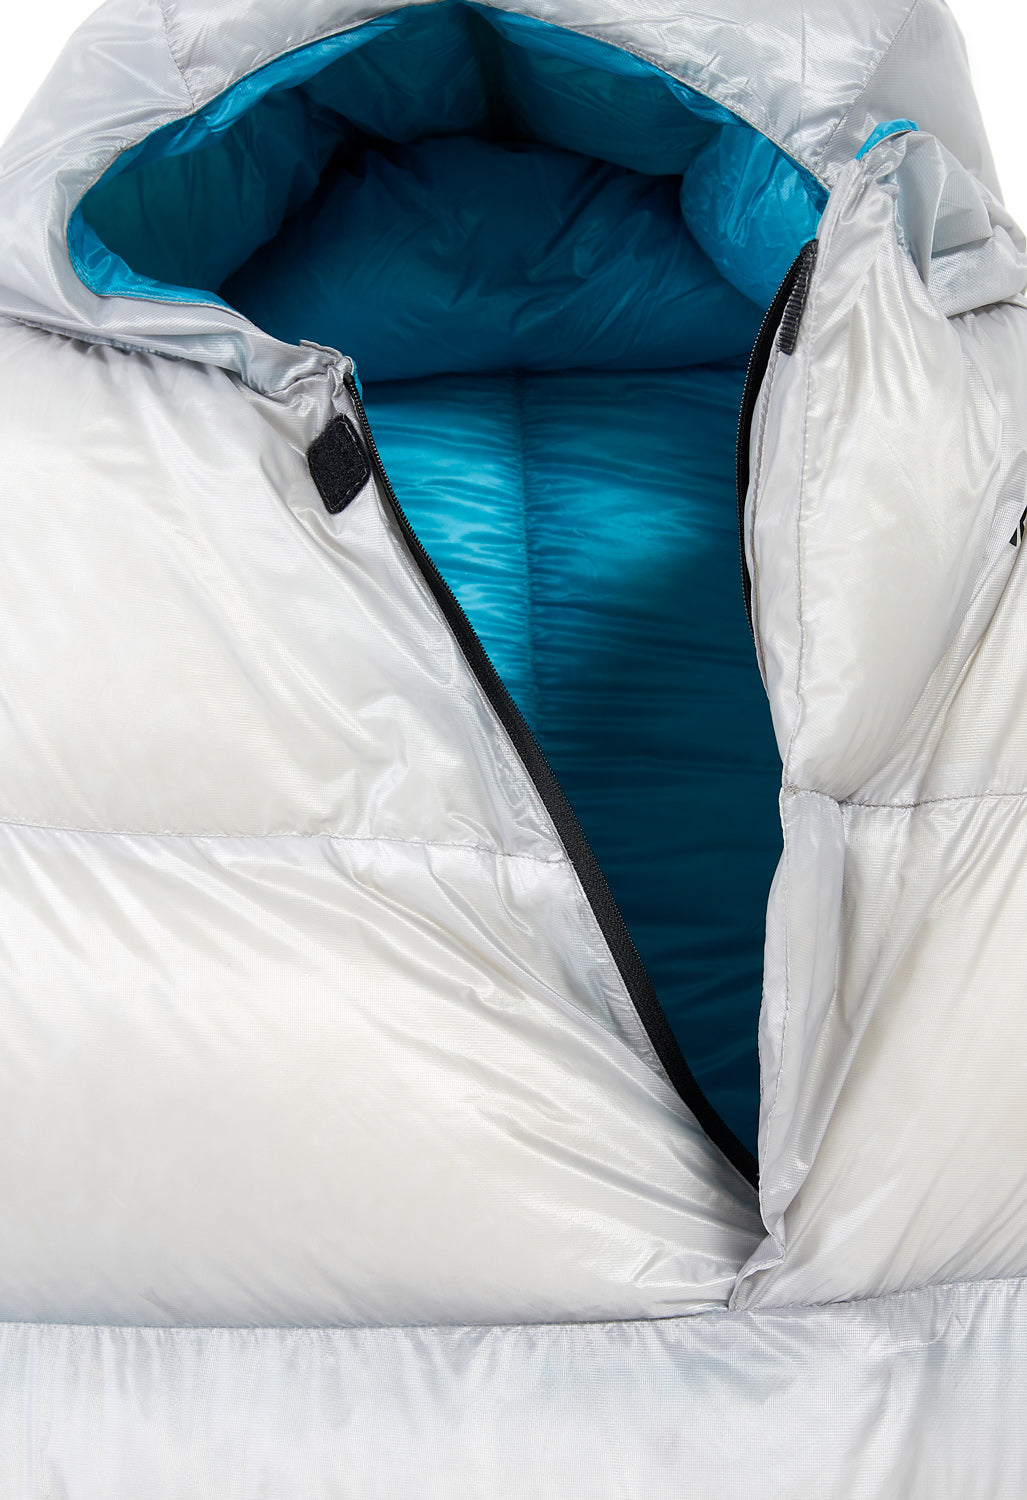 Nanga Minimarhythm 5Below Sleeping Bag - Light Grey – Outsiders